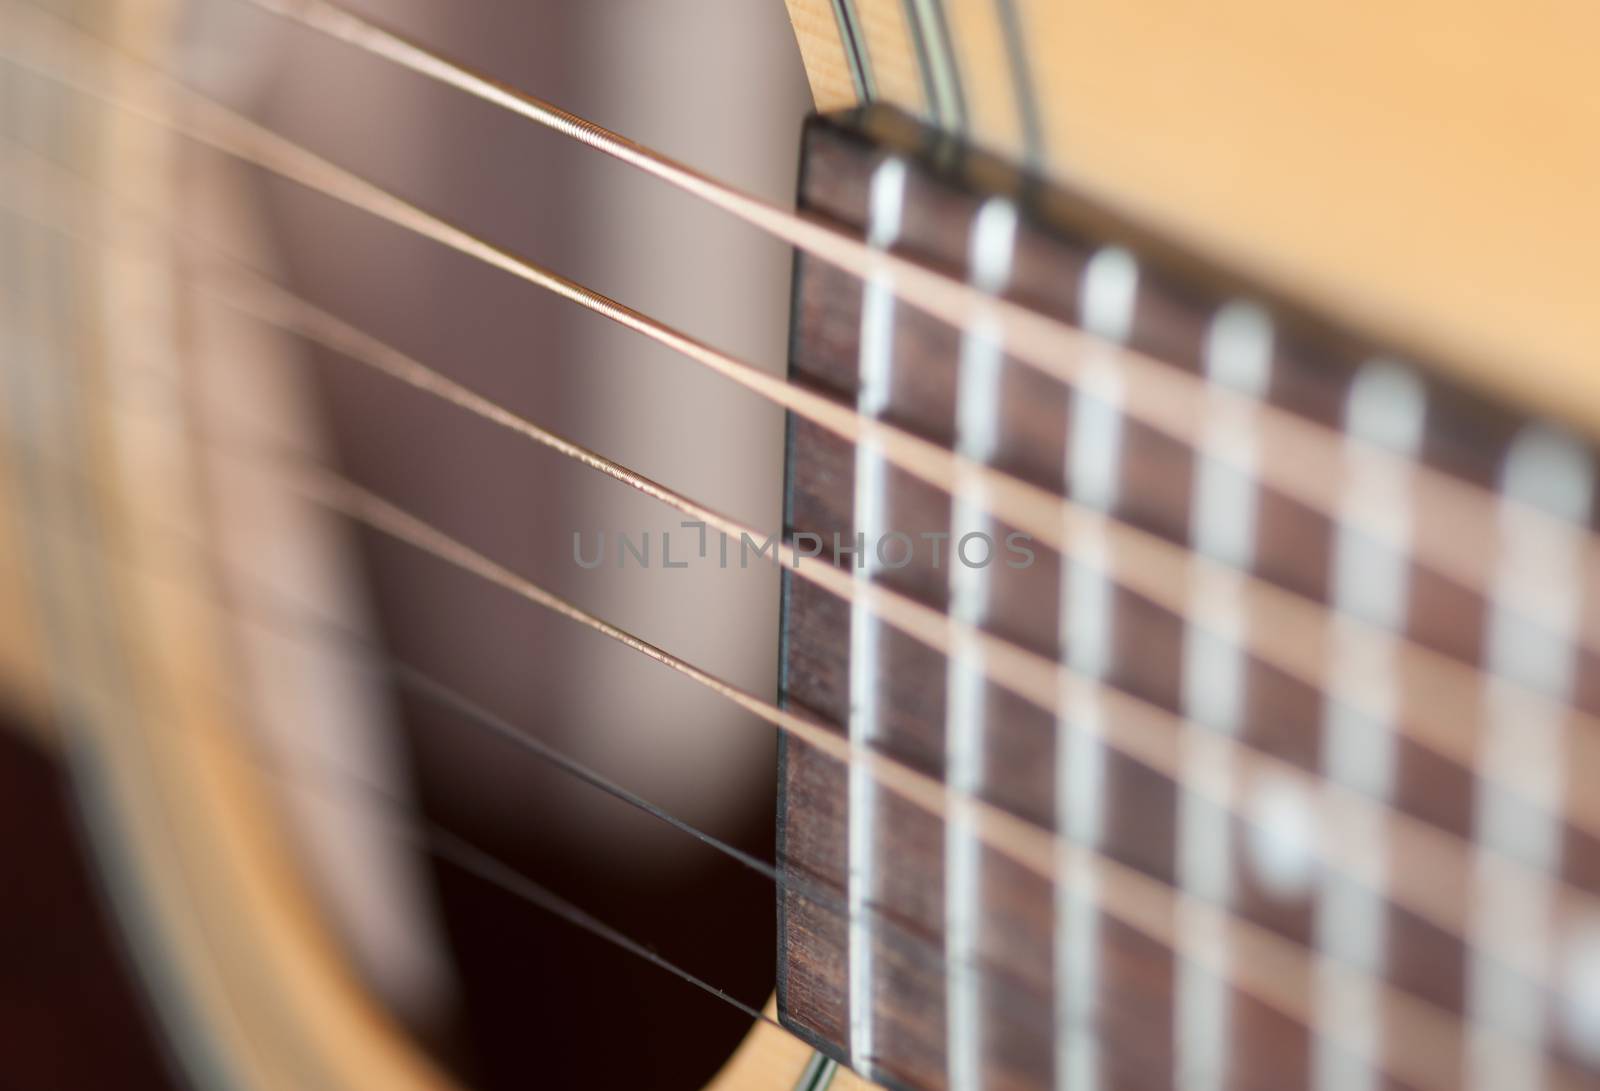 Guitar detail macro of strings and resonance box.